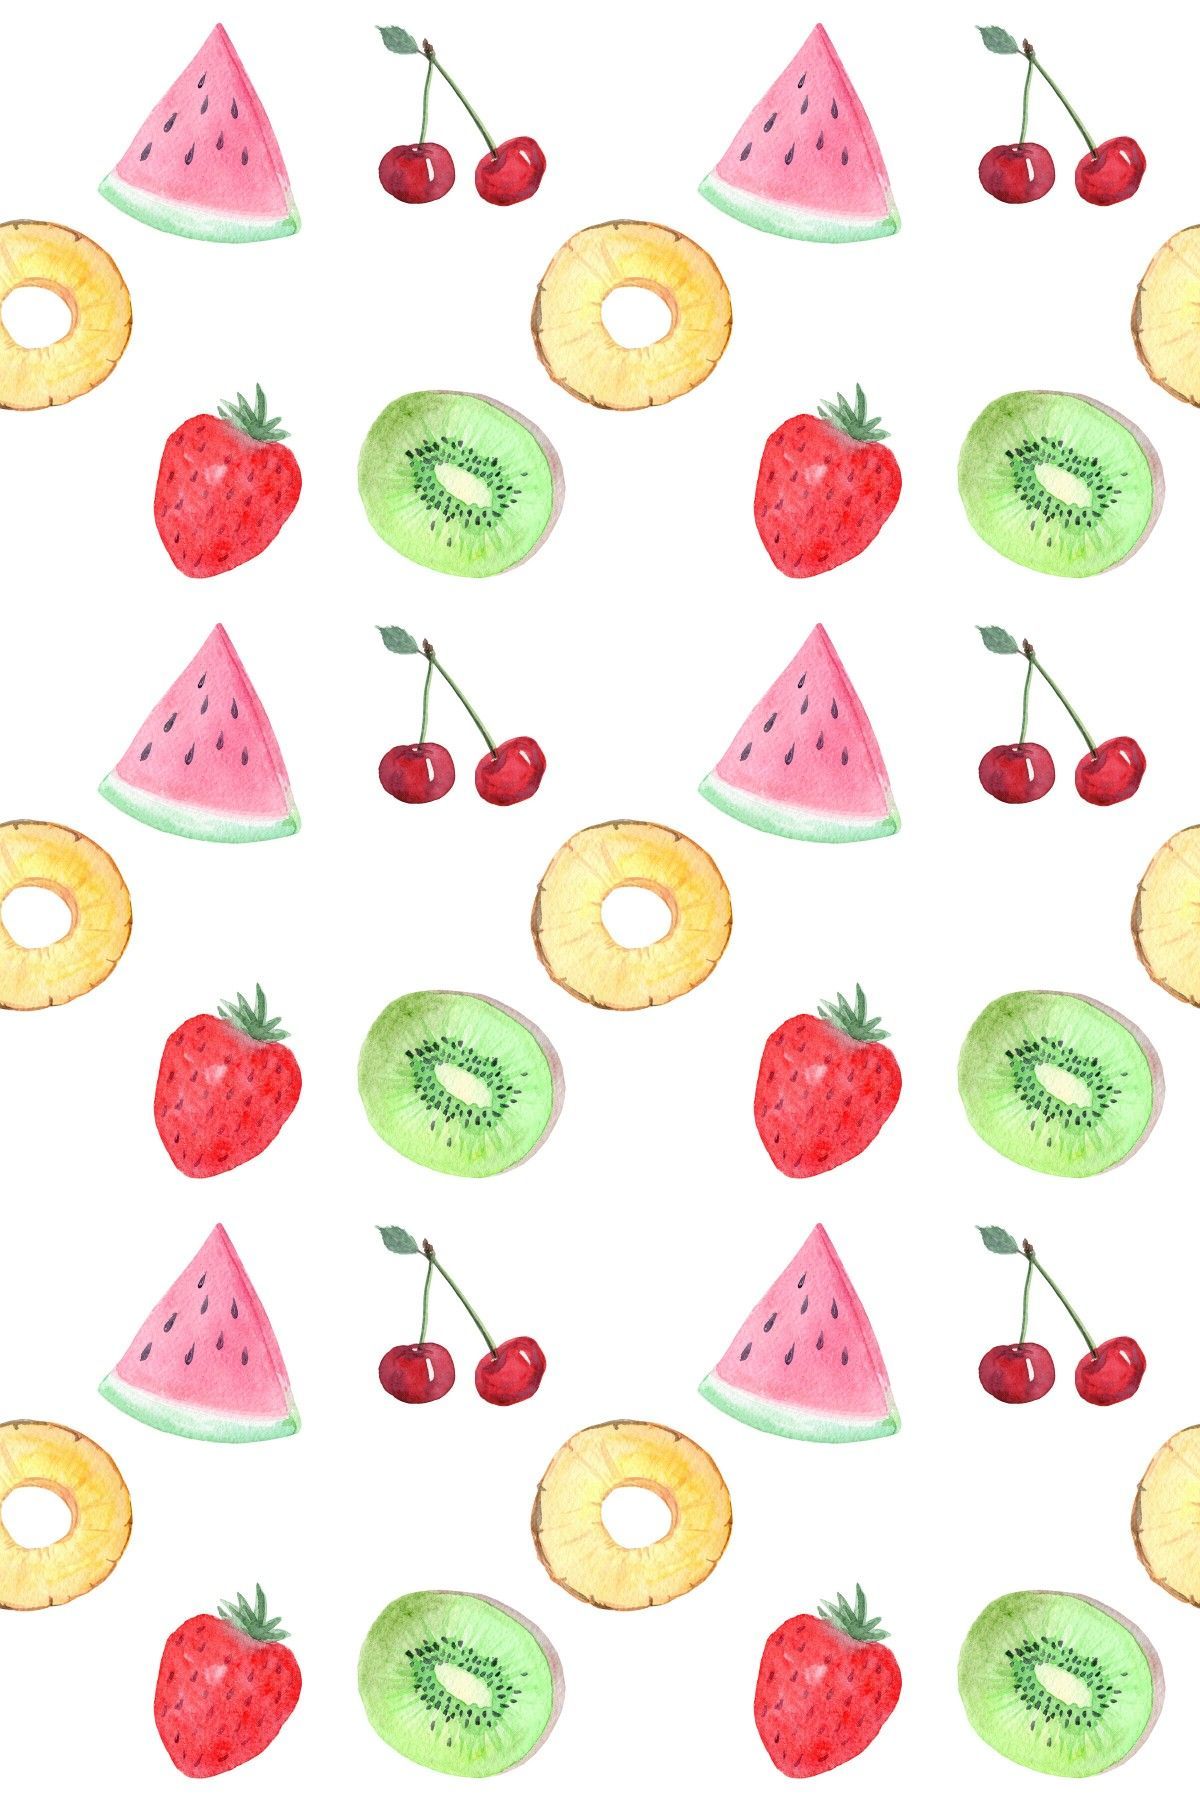 Fruits Pattern Wallpaper Free Fruits Pattern Background